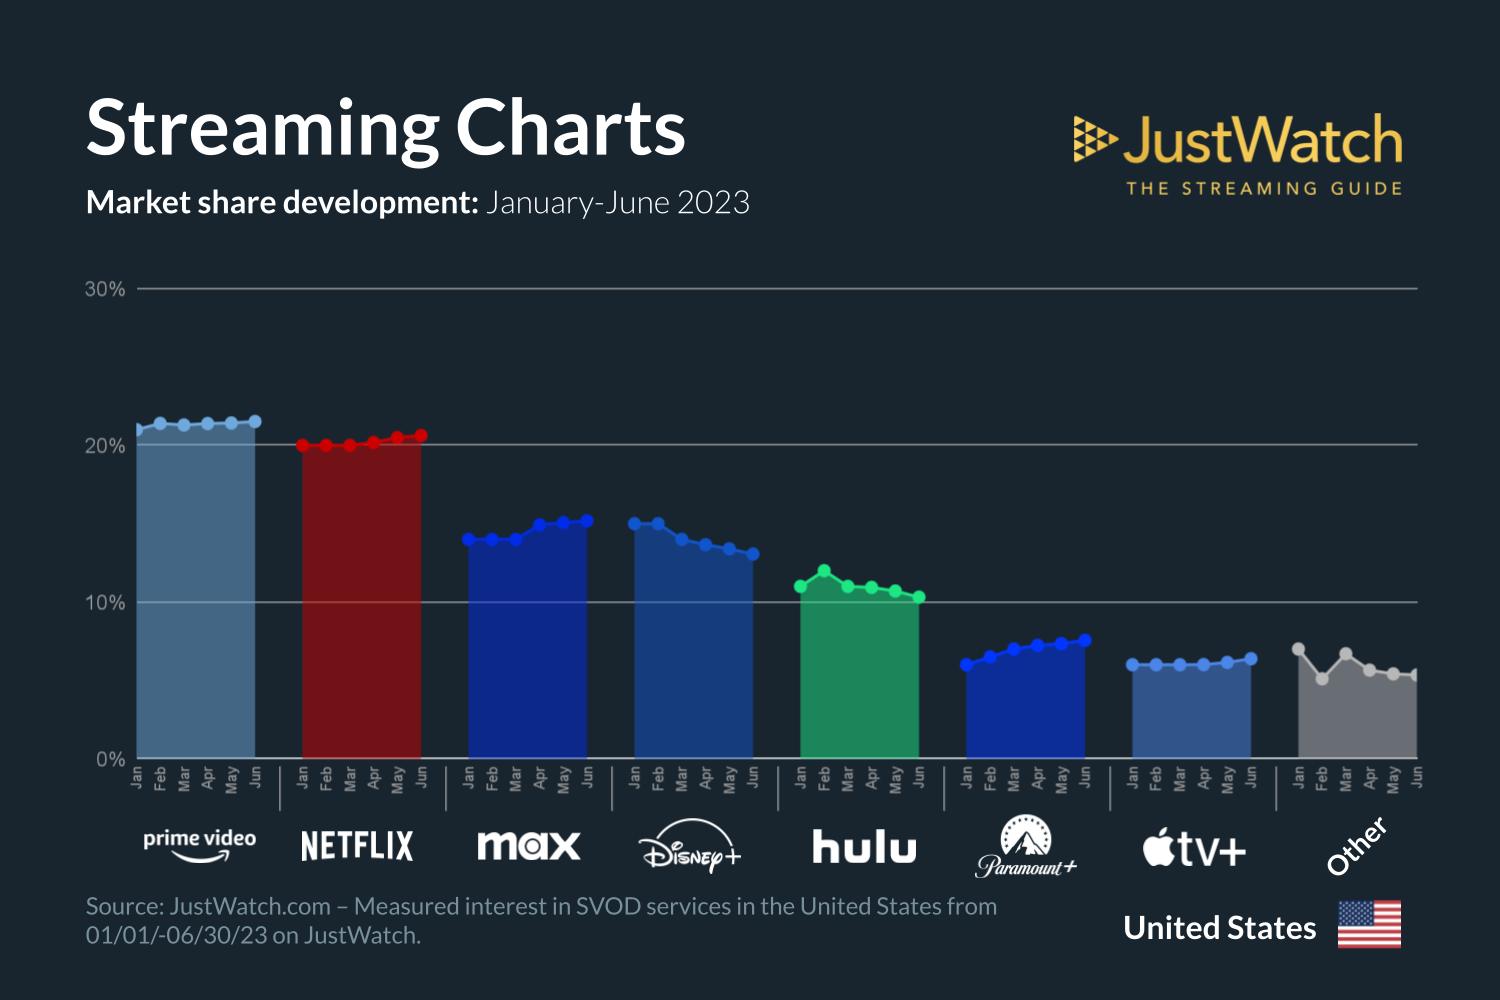 US streaming market share